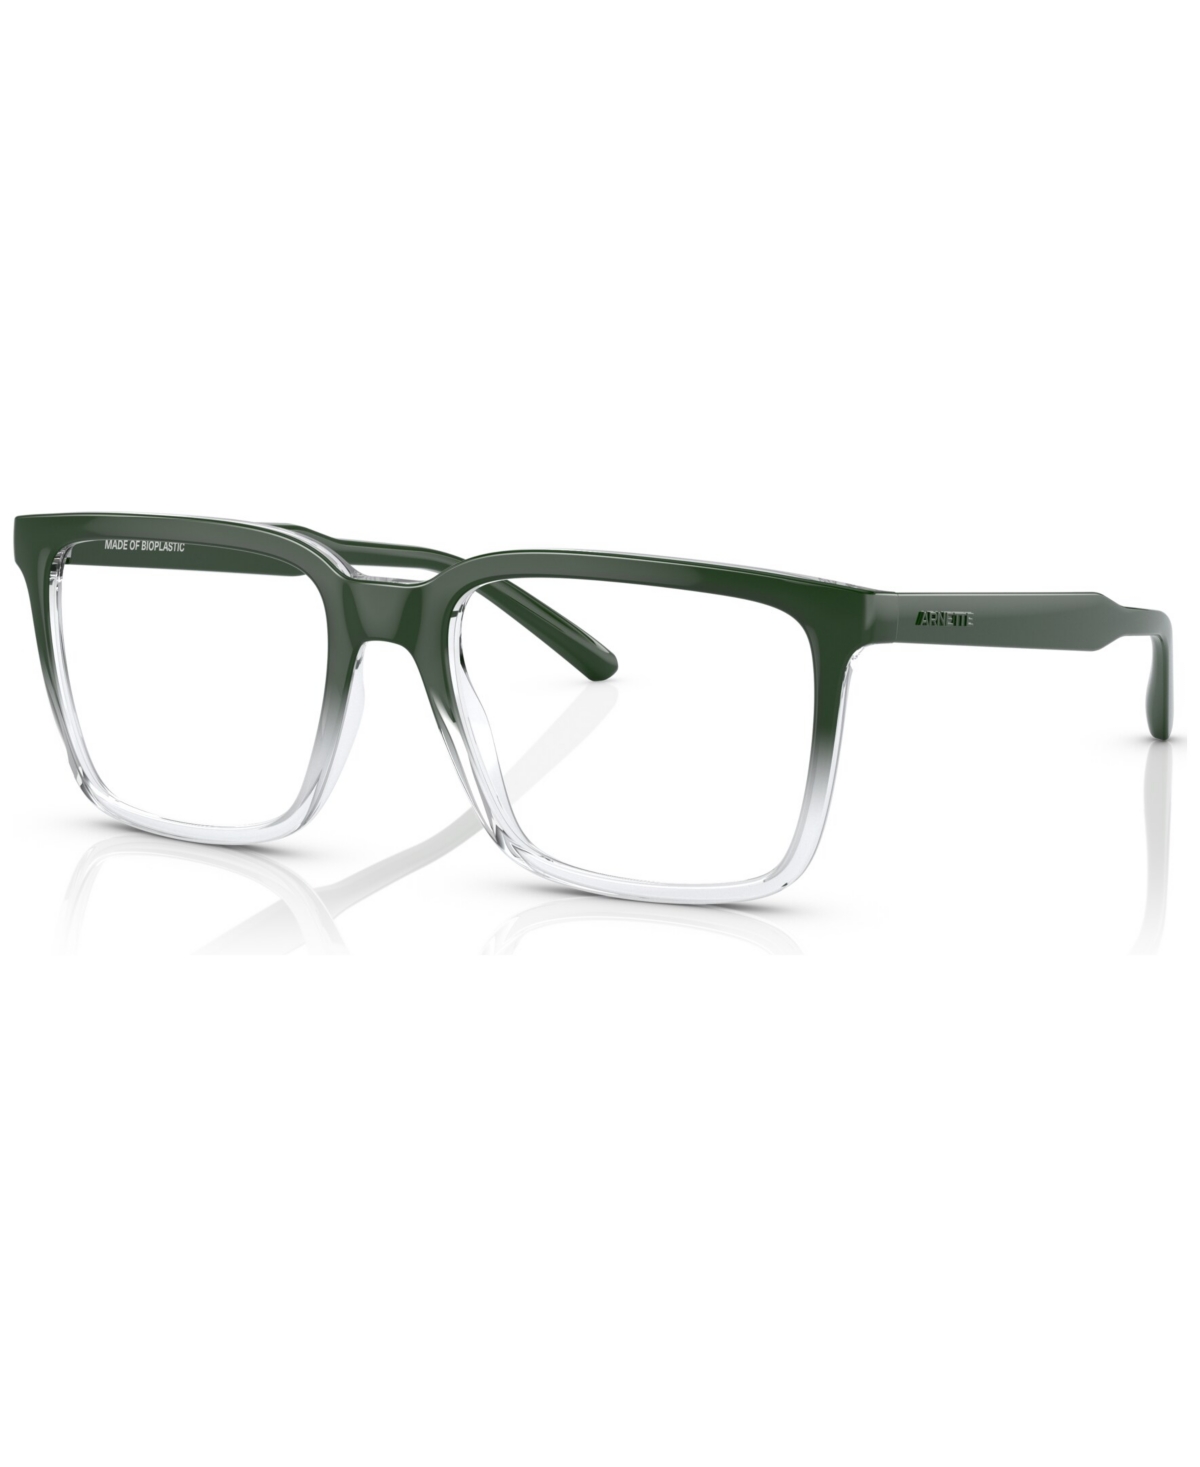 Unisex Rectangle Eyeglasses, AN721555-o - Crystal Gradient Green